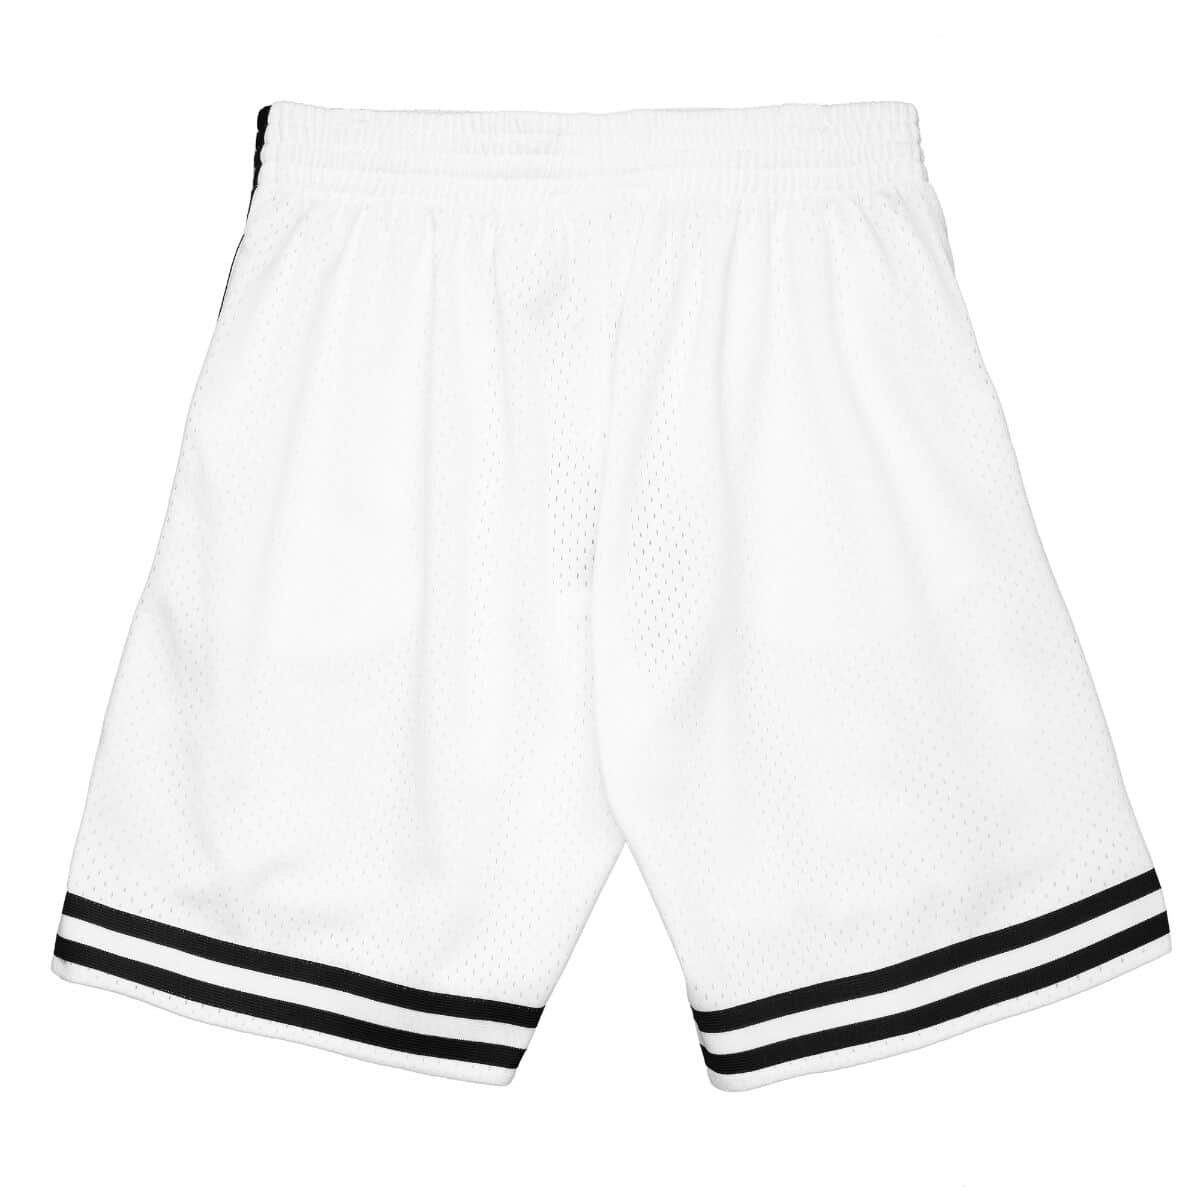 Boston NBA & Mitchell Ness Swingman Shorts 1985 White Celtics